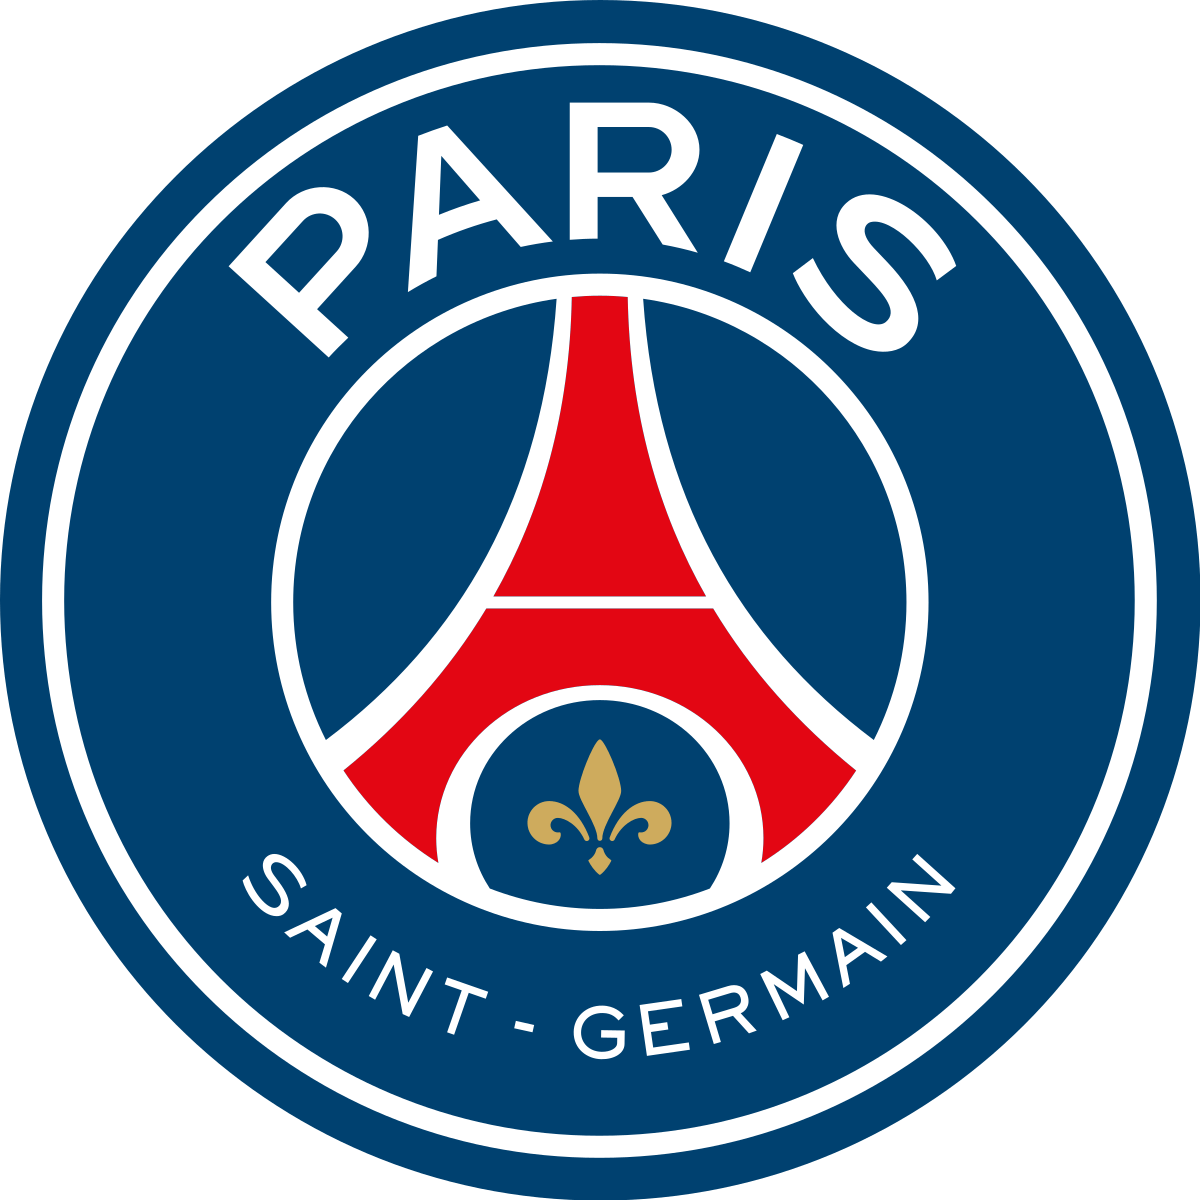 Paris Logo - Paris Saint-Germain F.C.